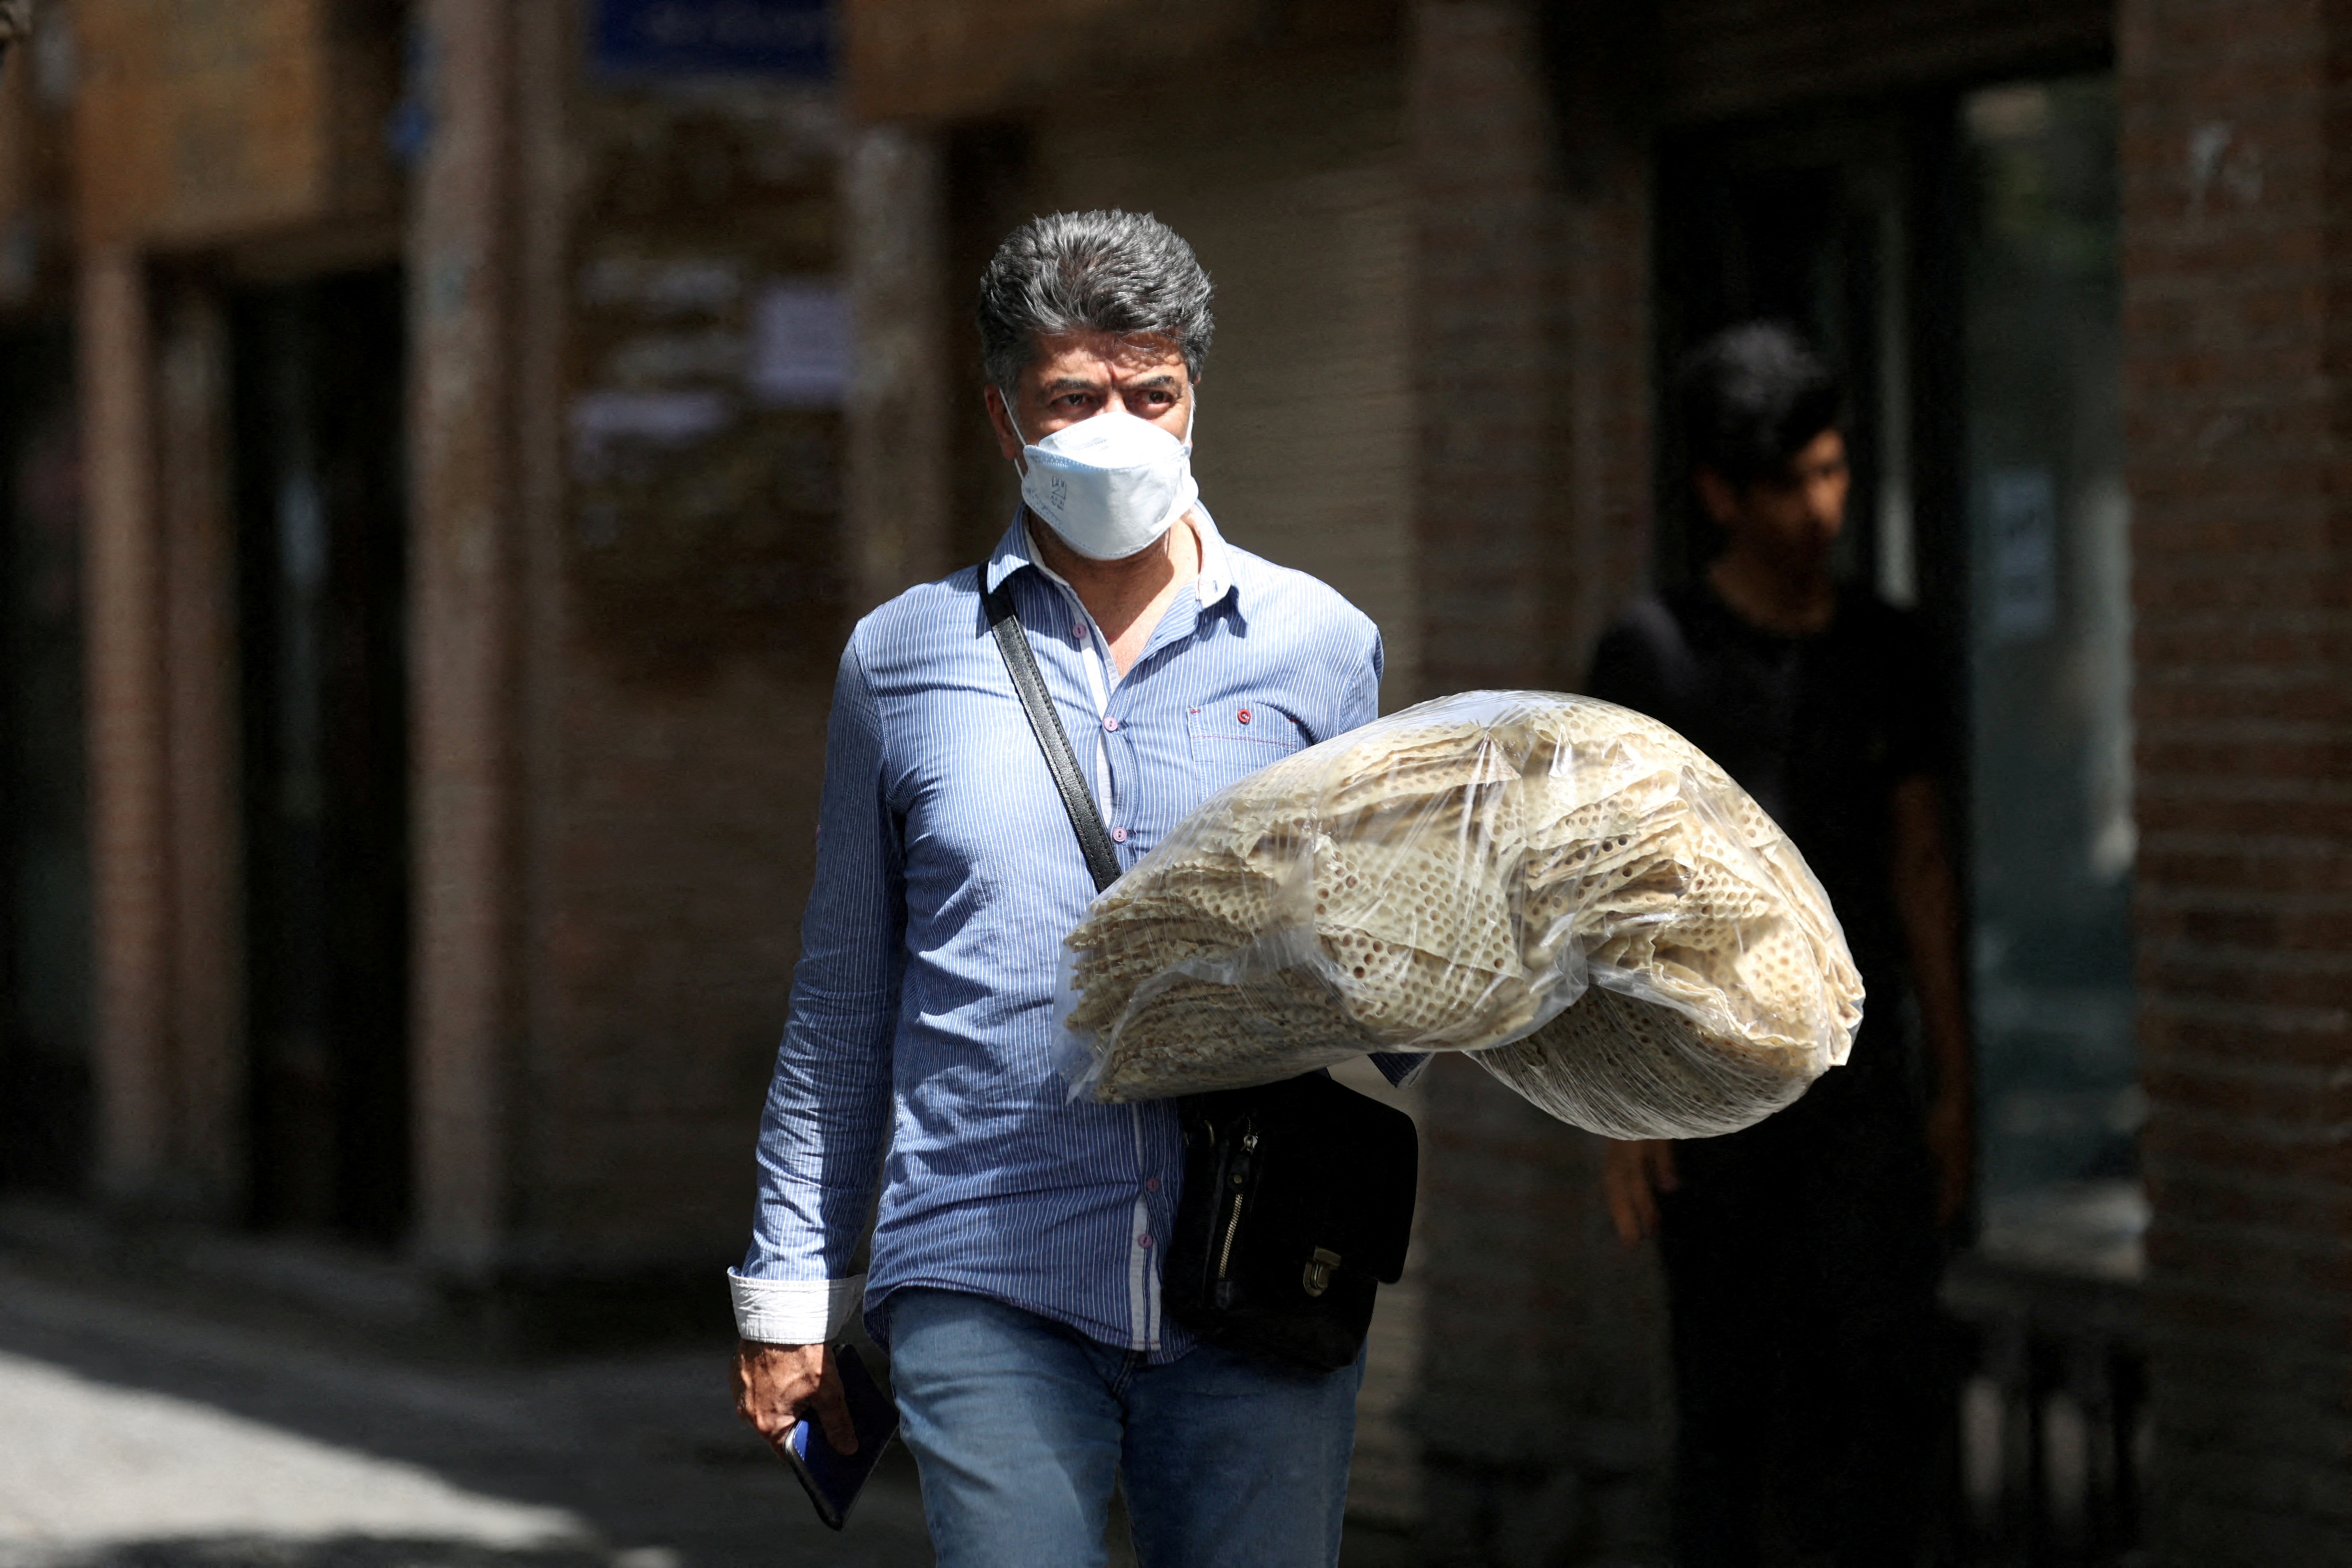 An Iranian man holds stacks of bread as he walks along a street in Tehran